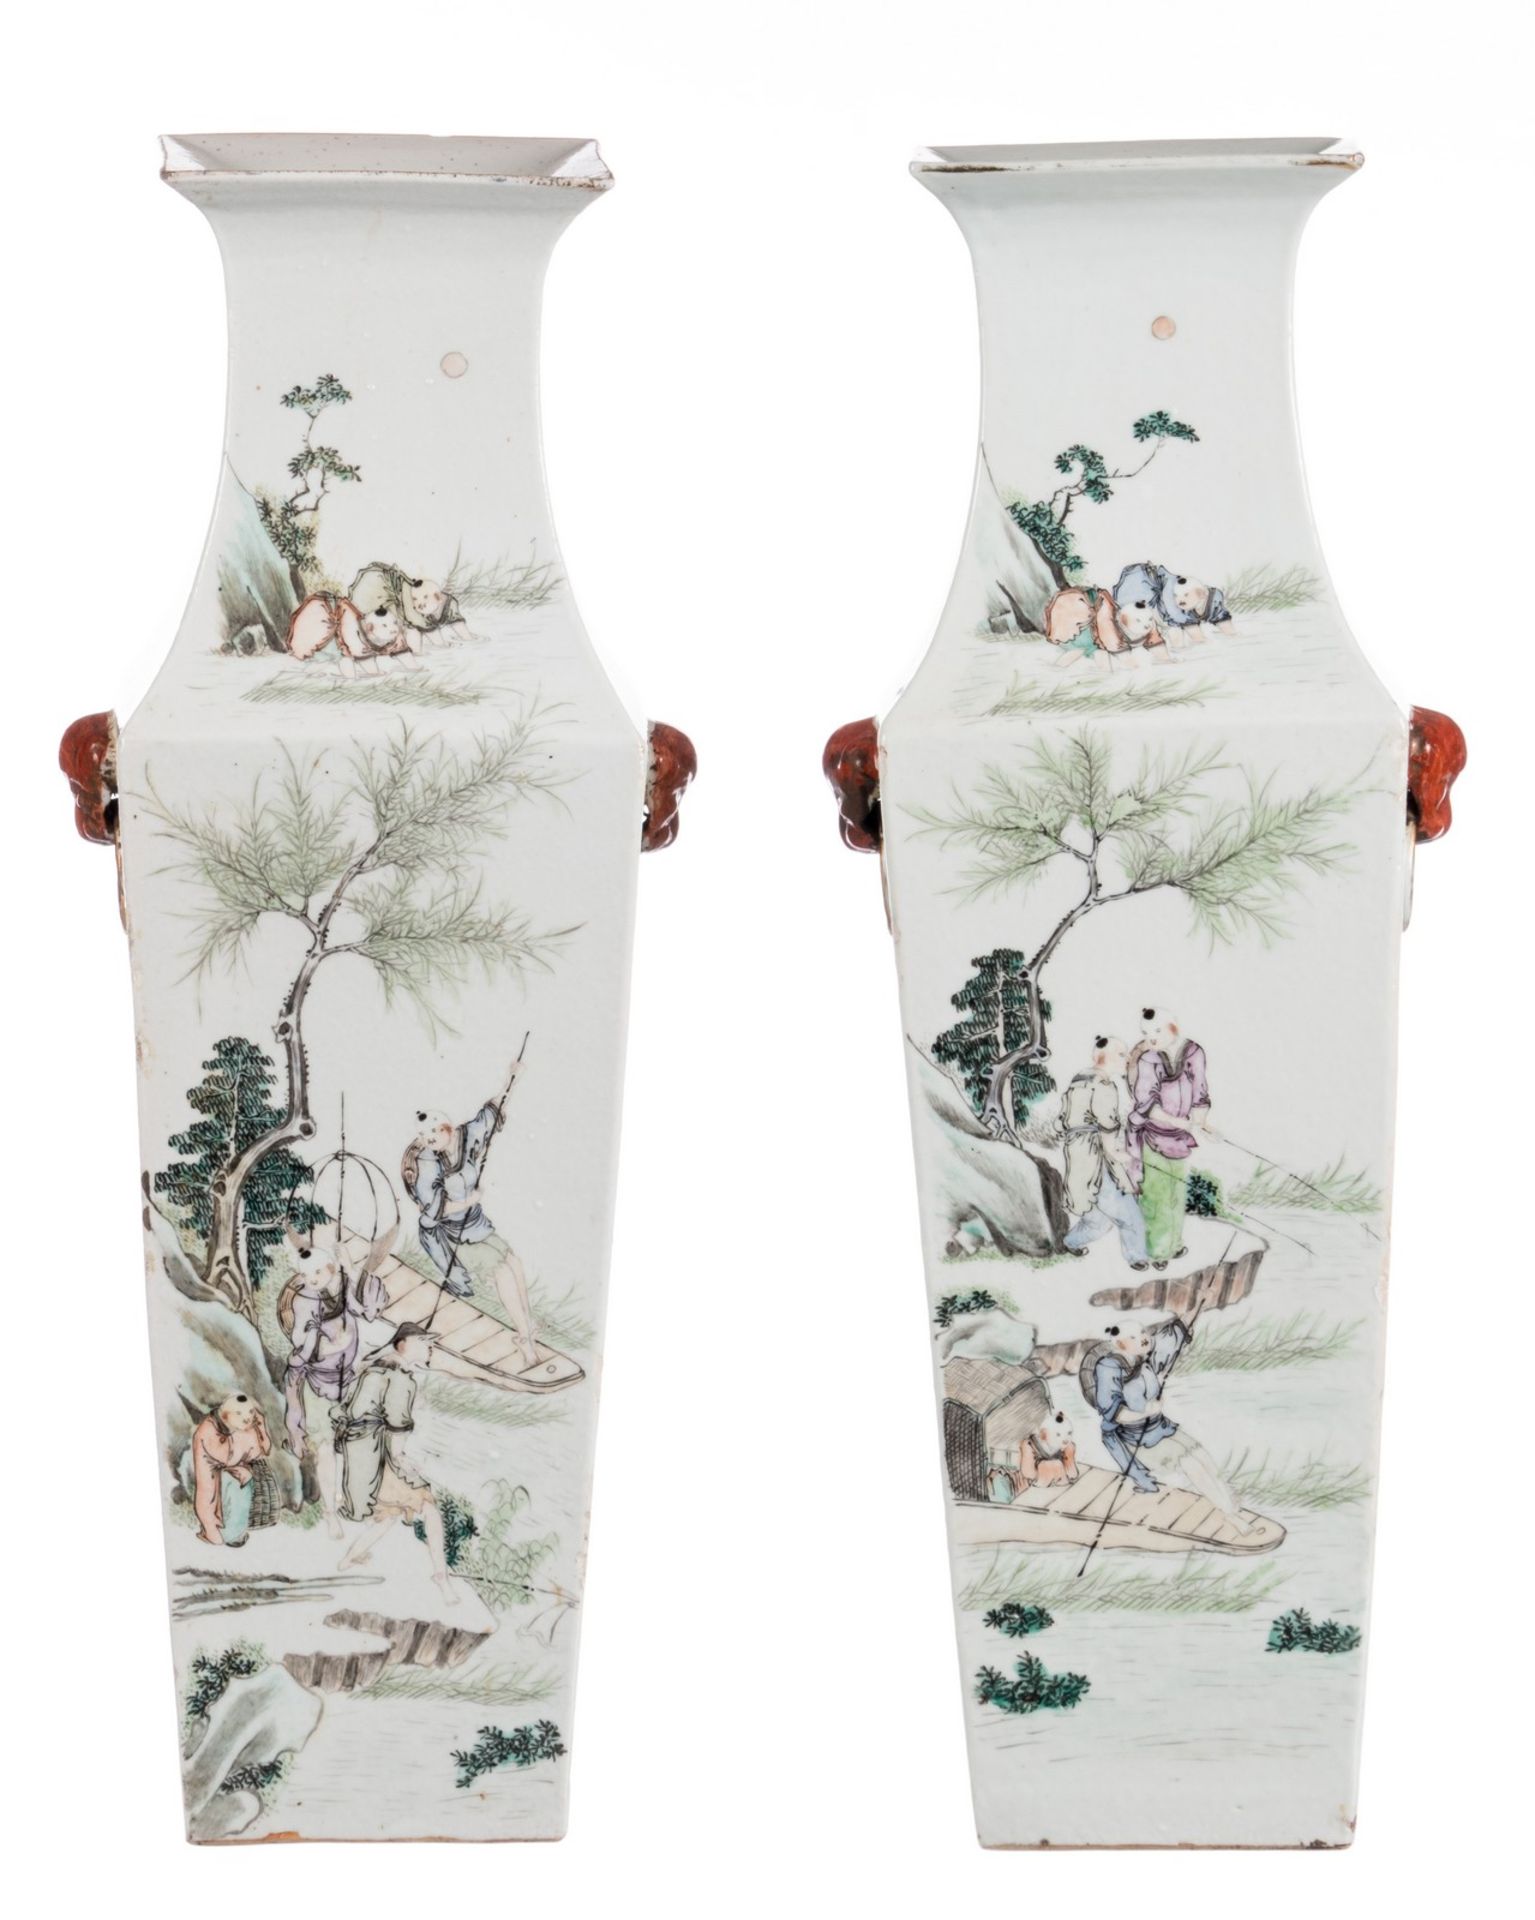 Two quadrangular vases, China, polychrome decorated with fishermen, literati and calligraphic texts,